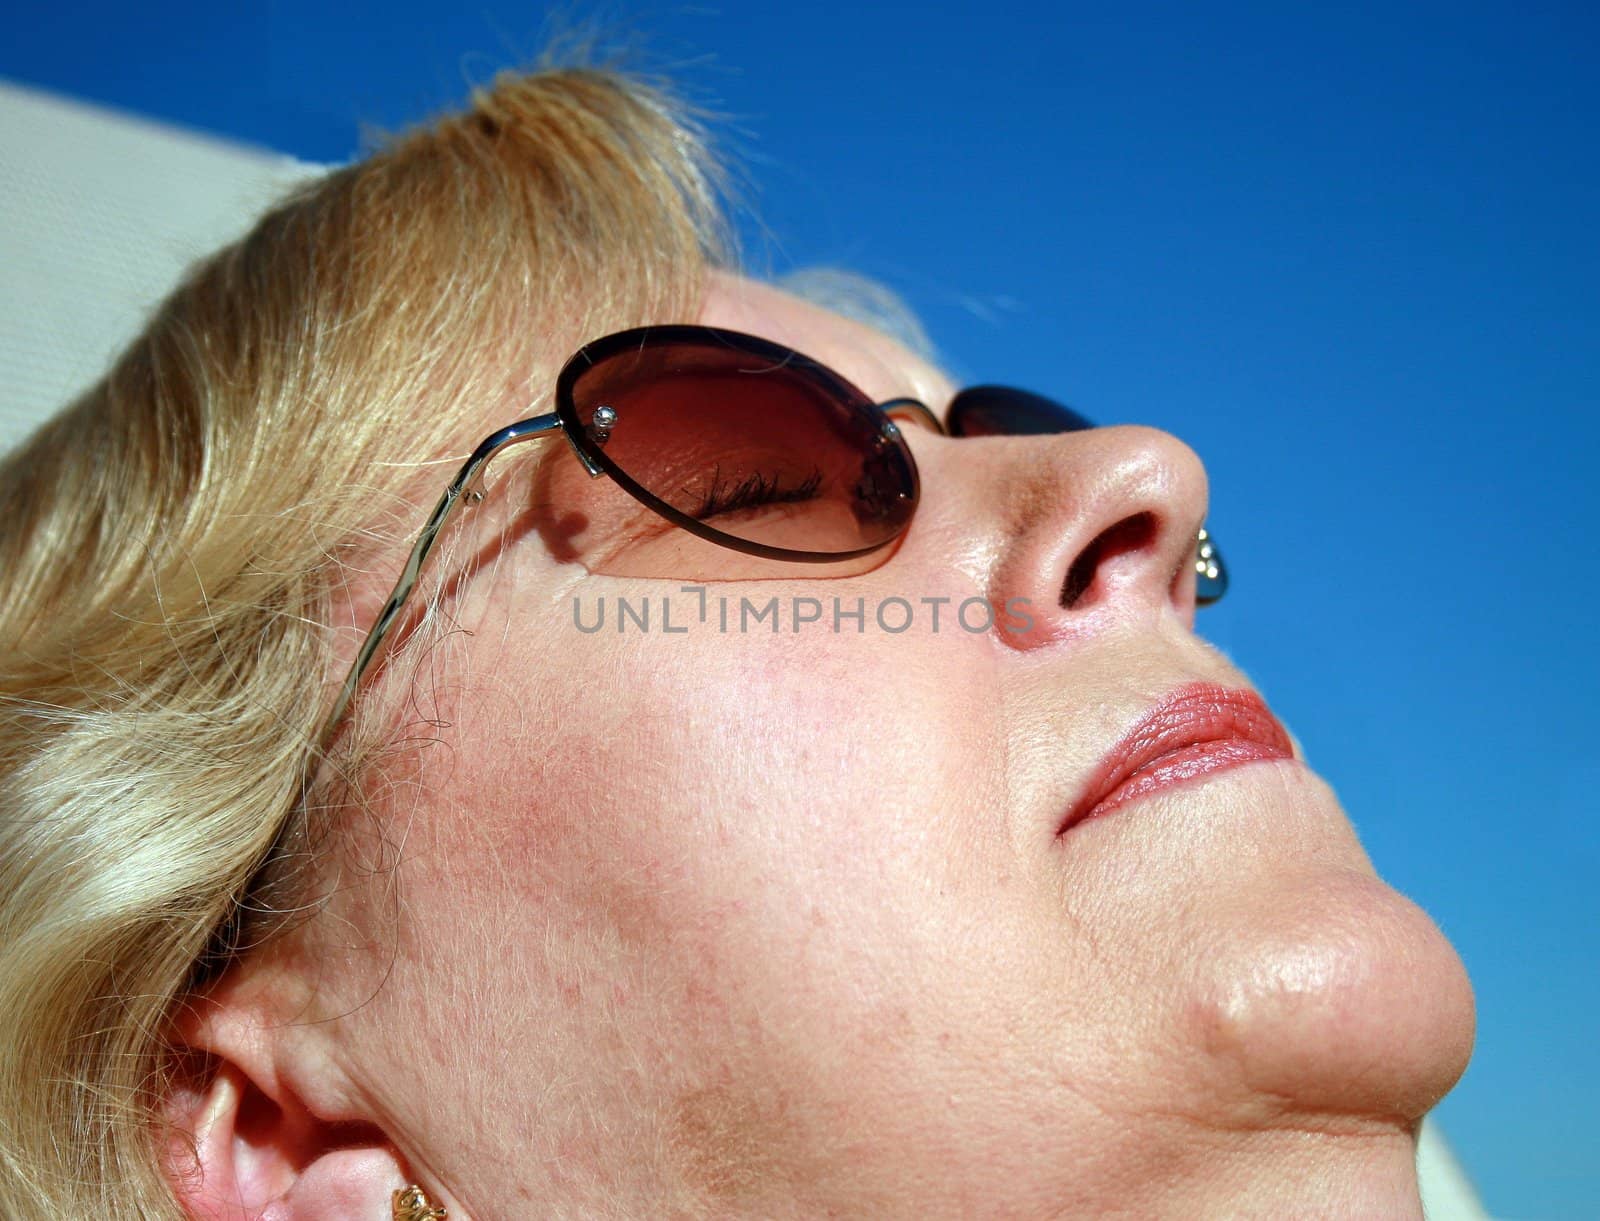 Carole sunbathing in Florida, relaxing in the sun.